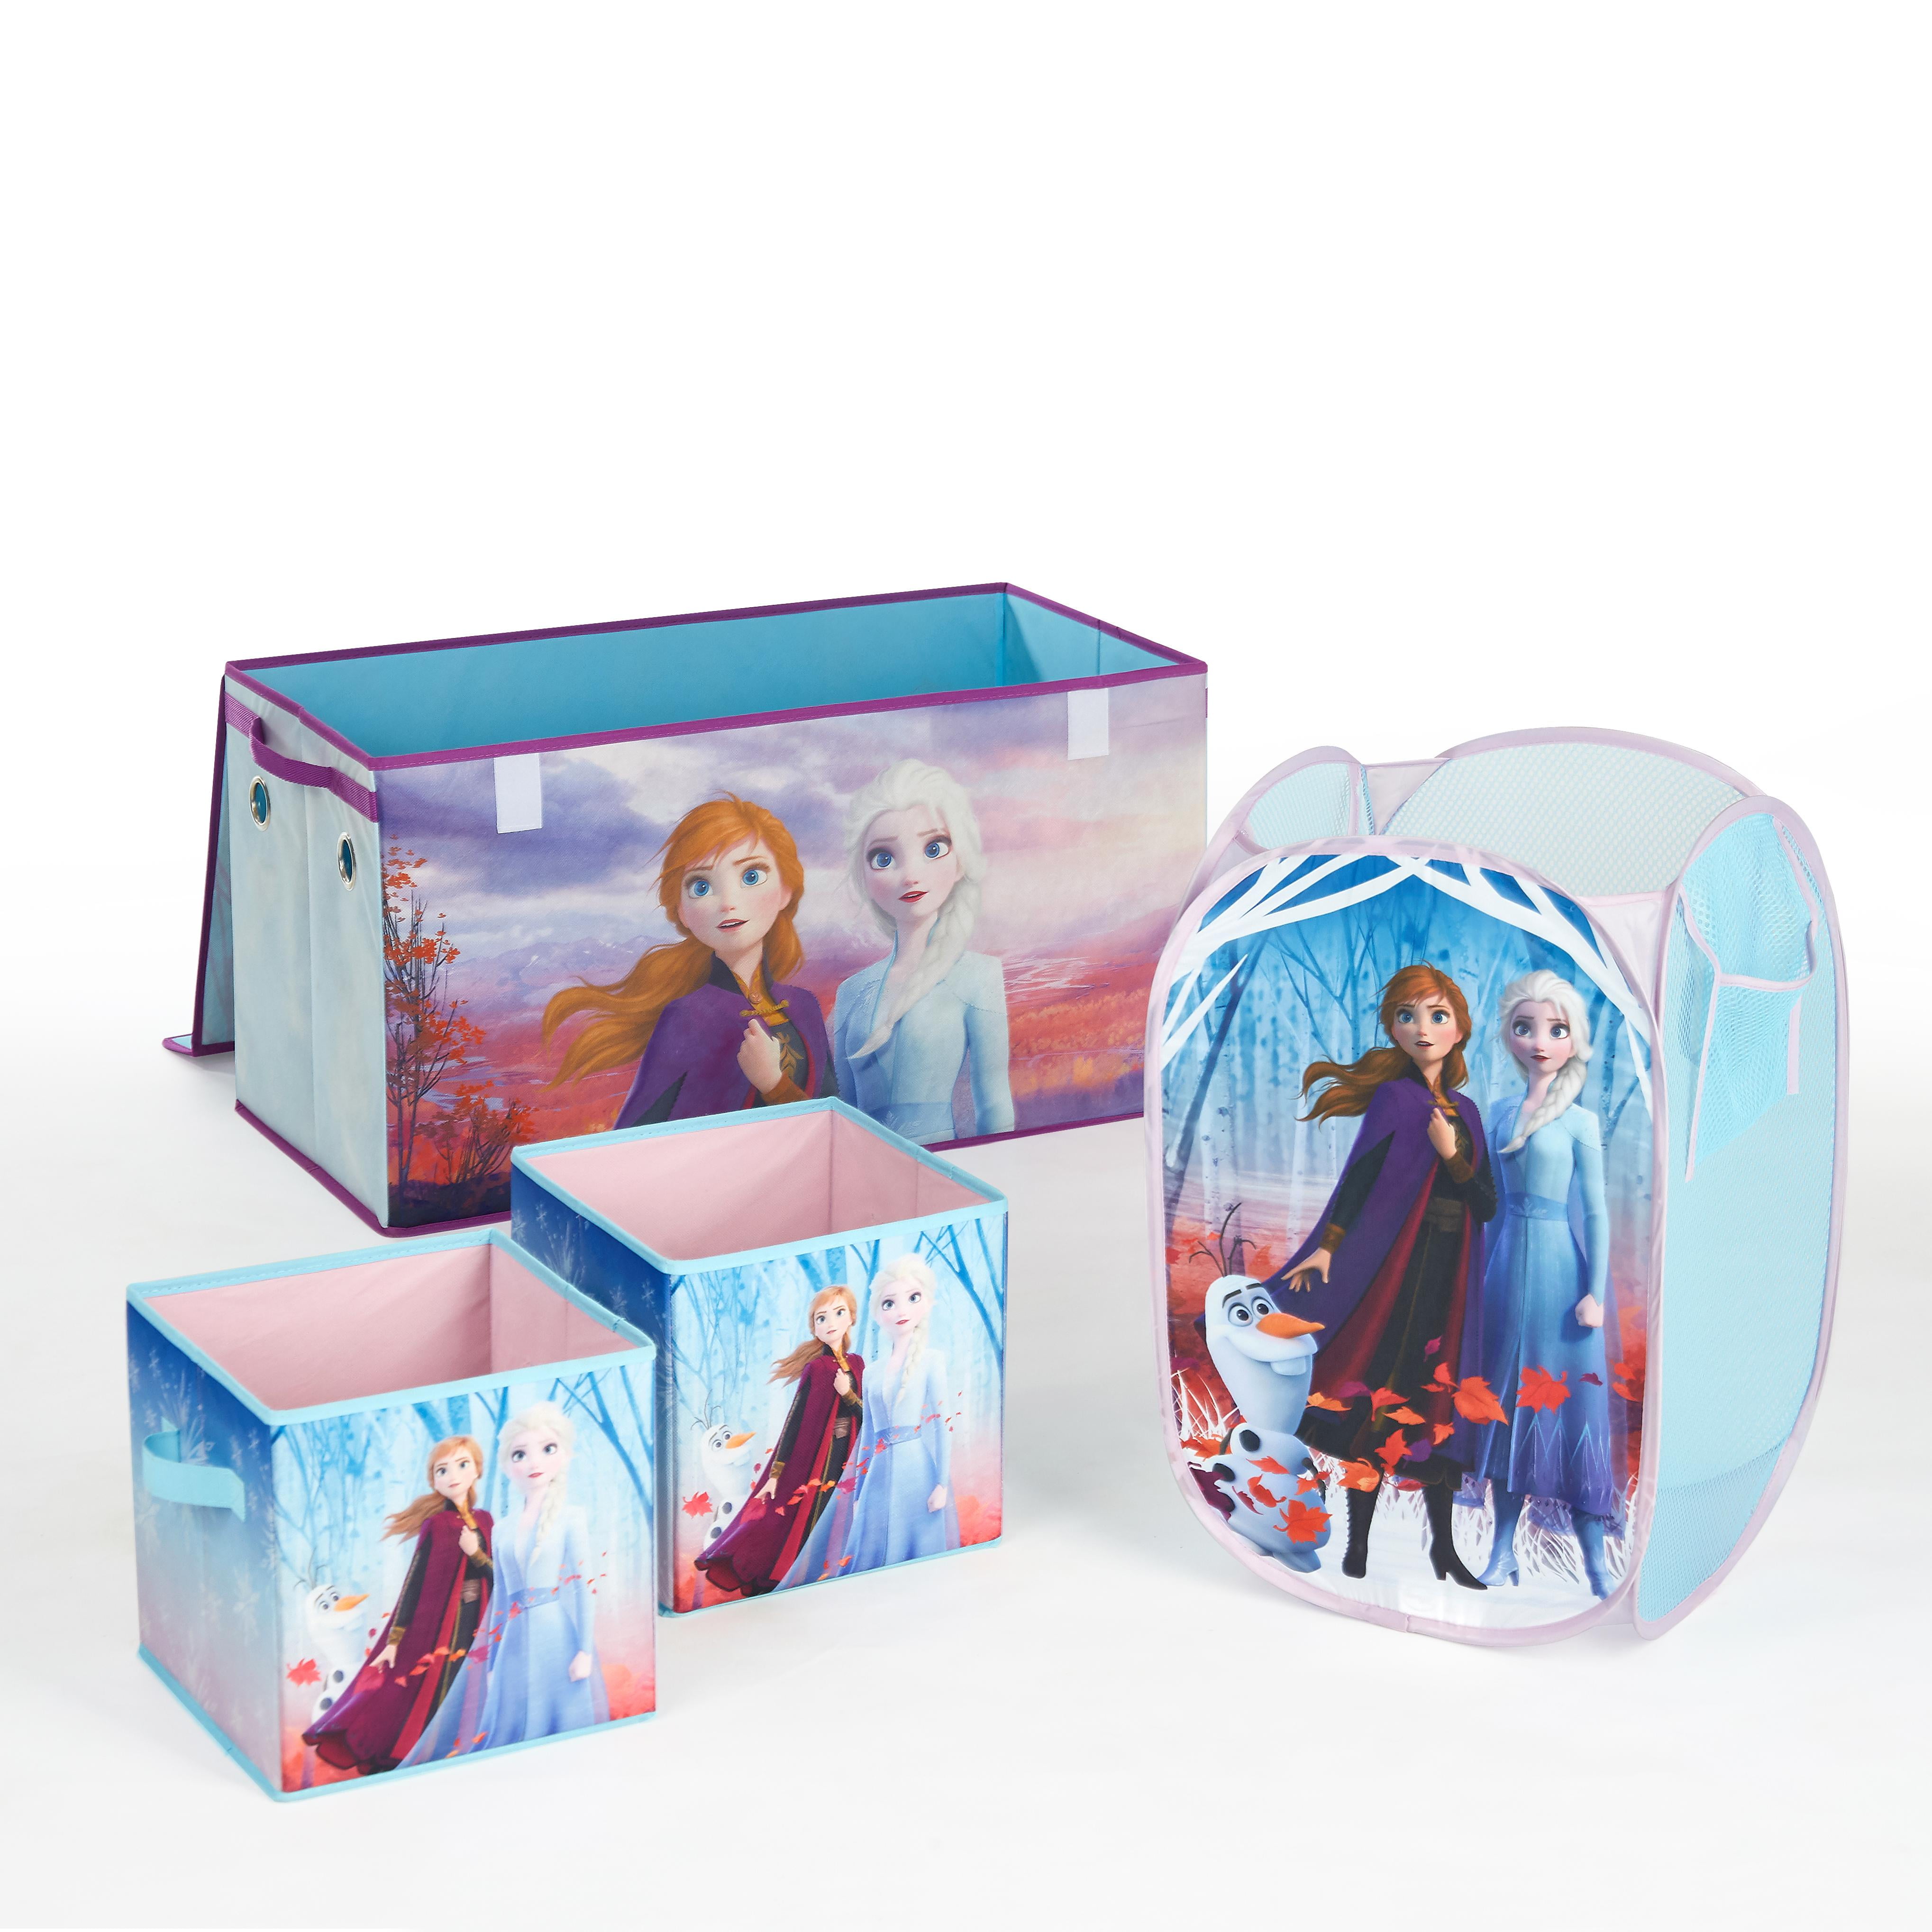 Disney Frozen Toy Box toy Chest storage box for toys books clothes 